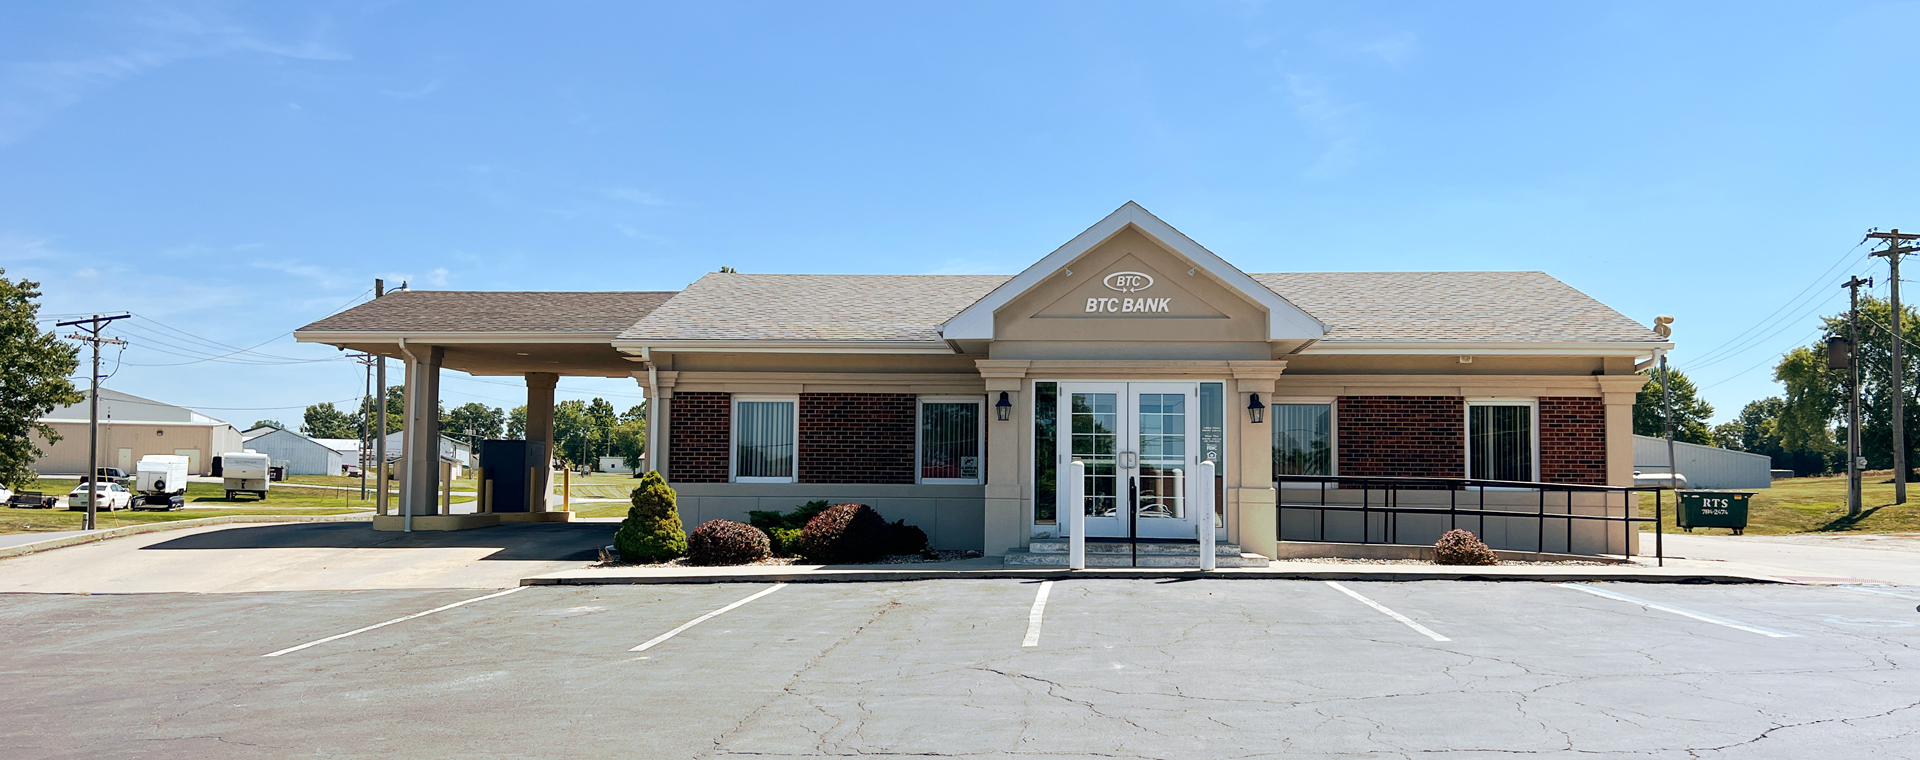 BTC Bank Salisbury, Missouri photo of branch building